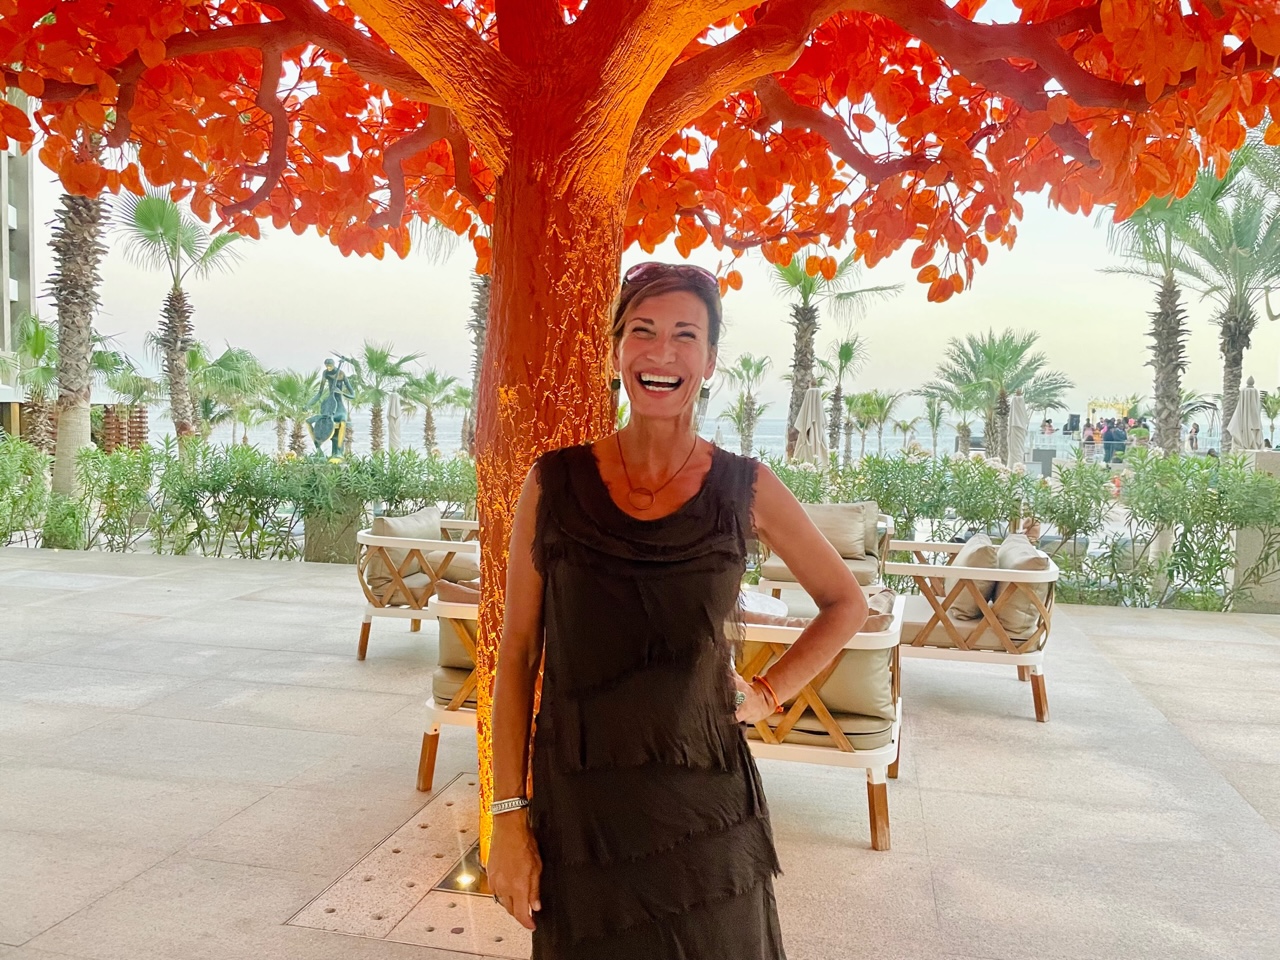 Nicole Apelian in front of lit tree